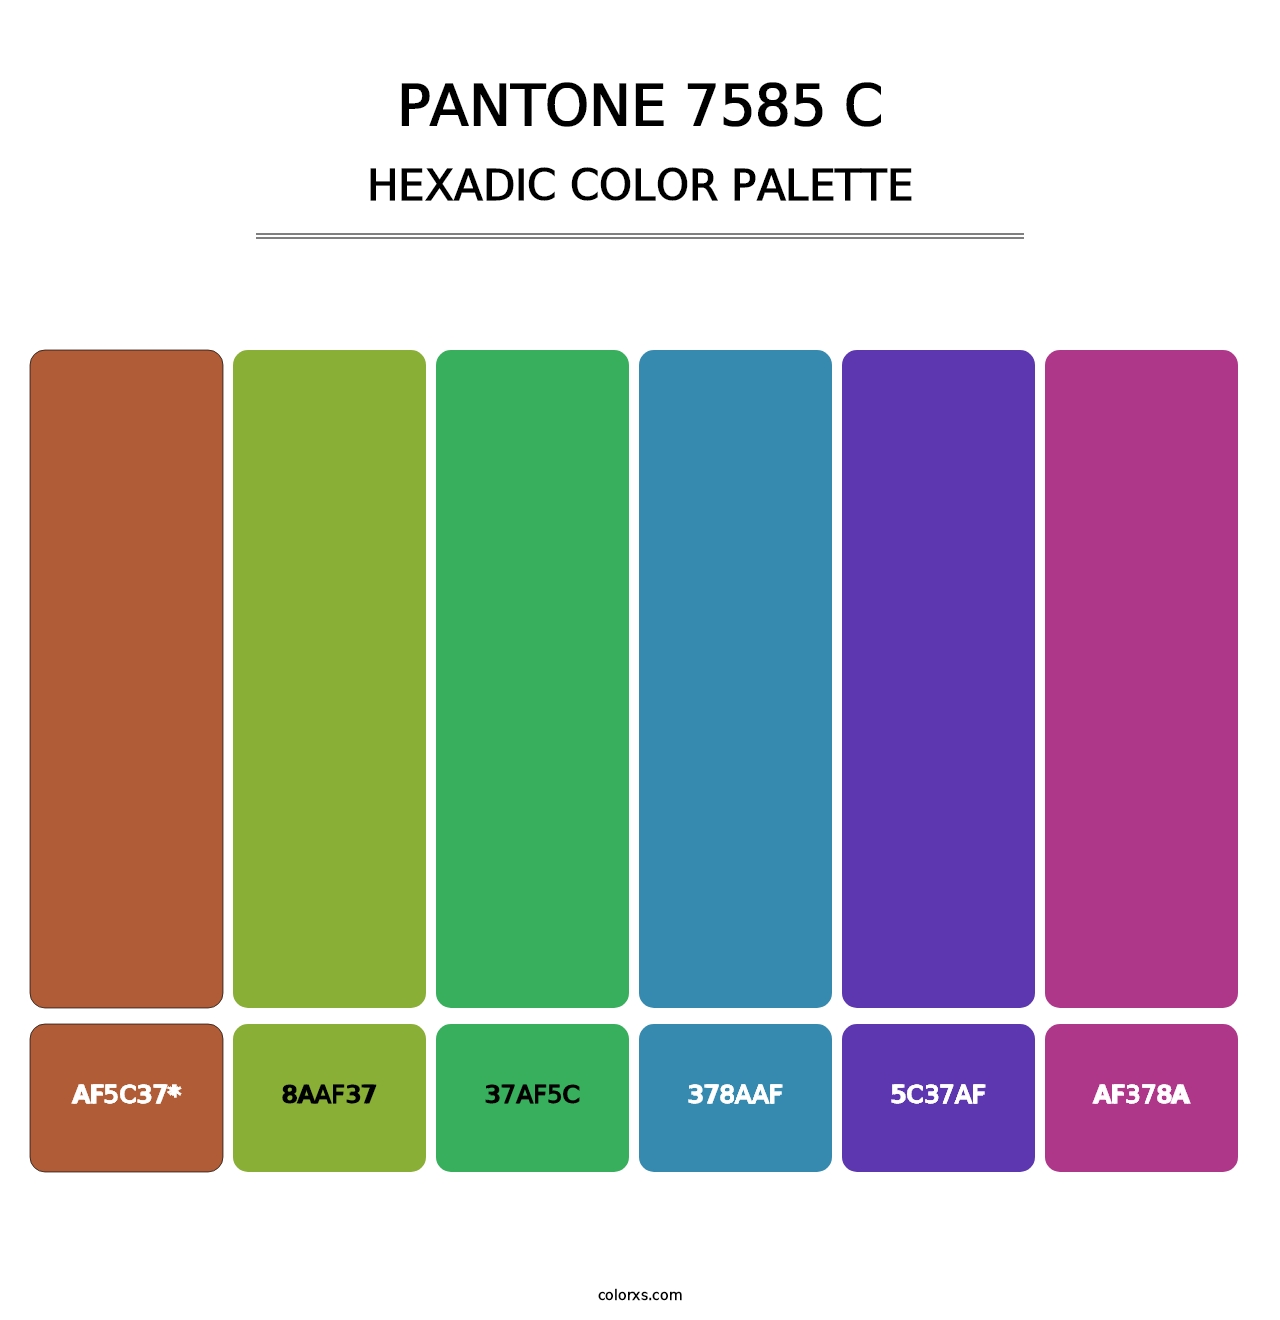 PANTONE 7585 C - Hexadic Color Palette